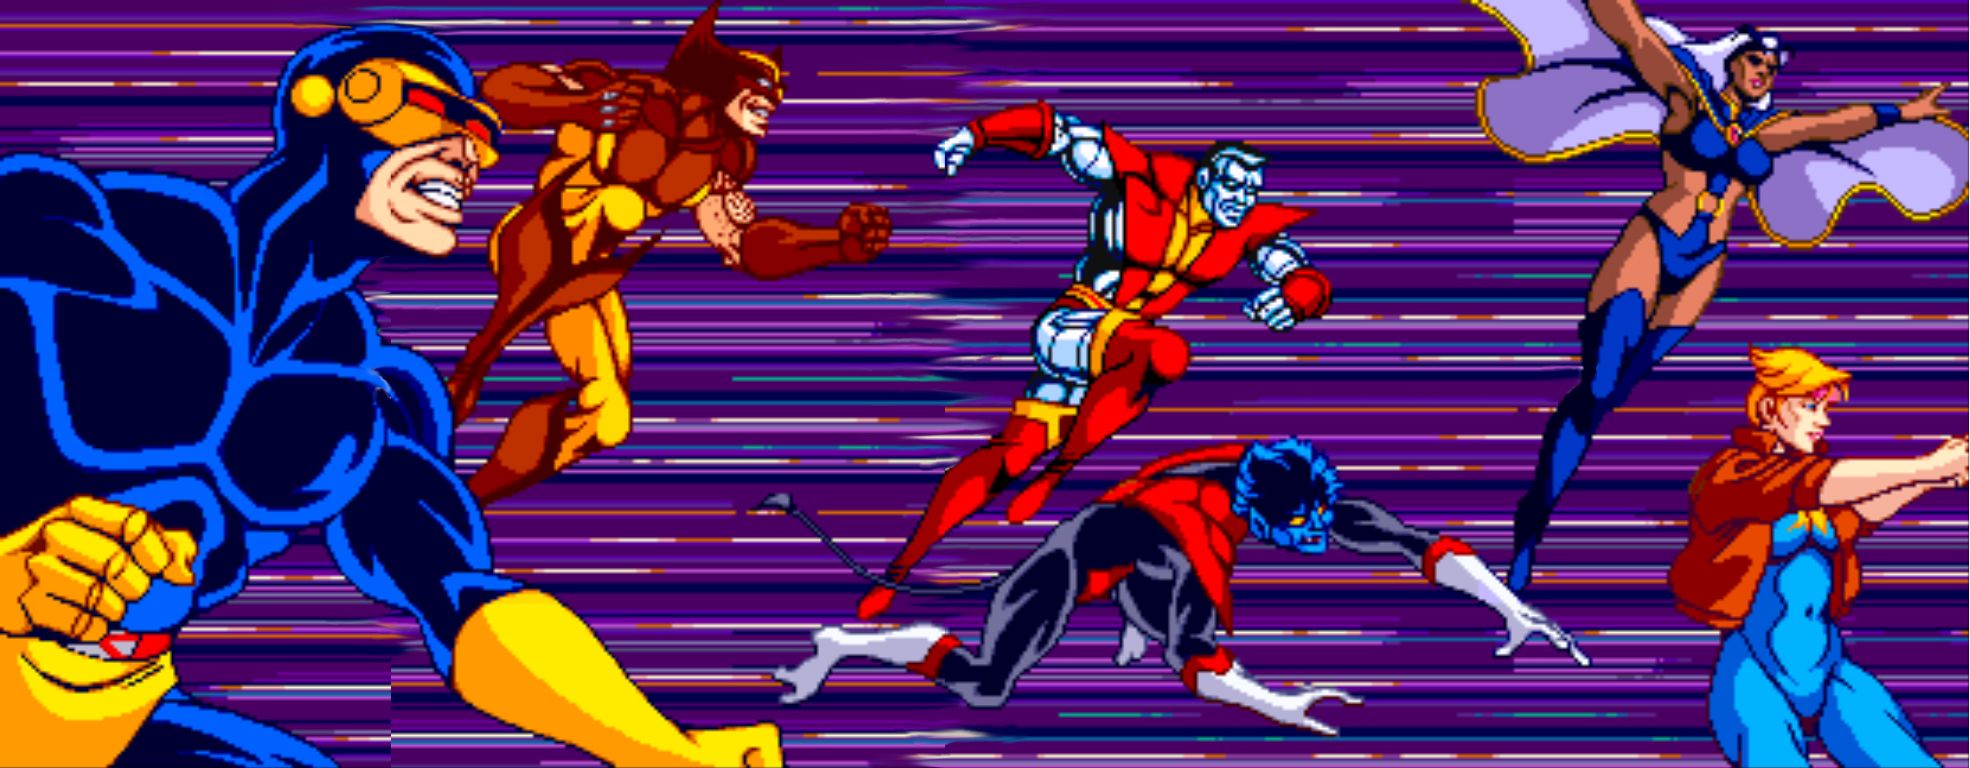 X-Men Arcade Game 